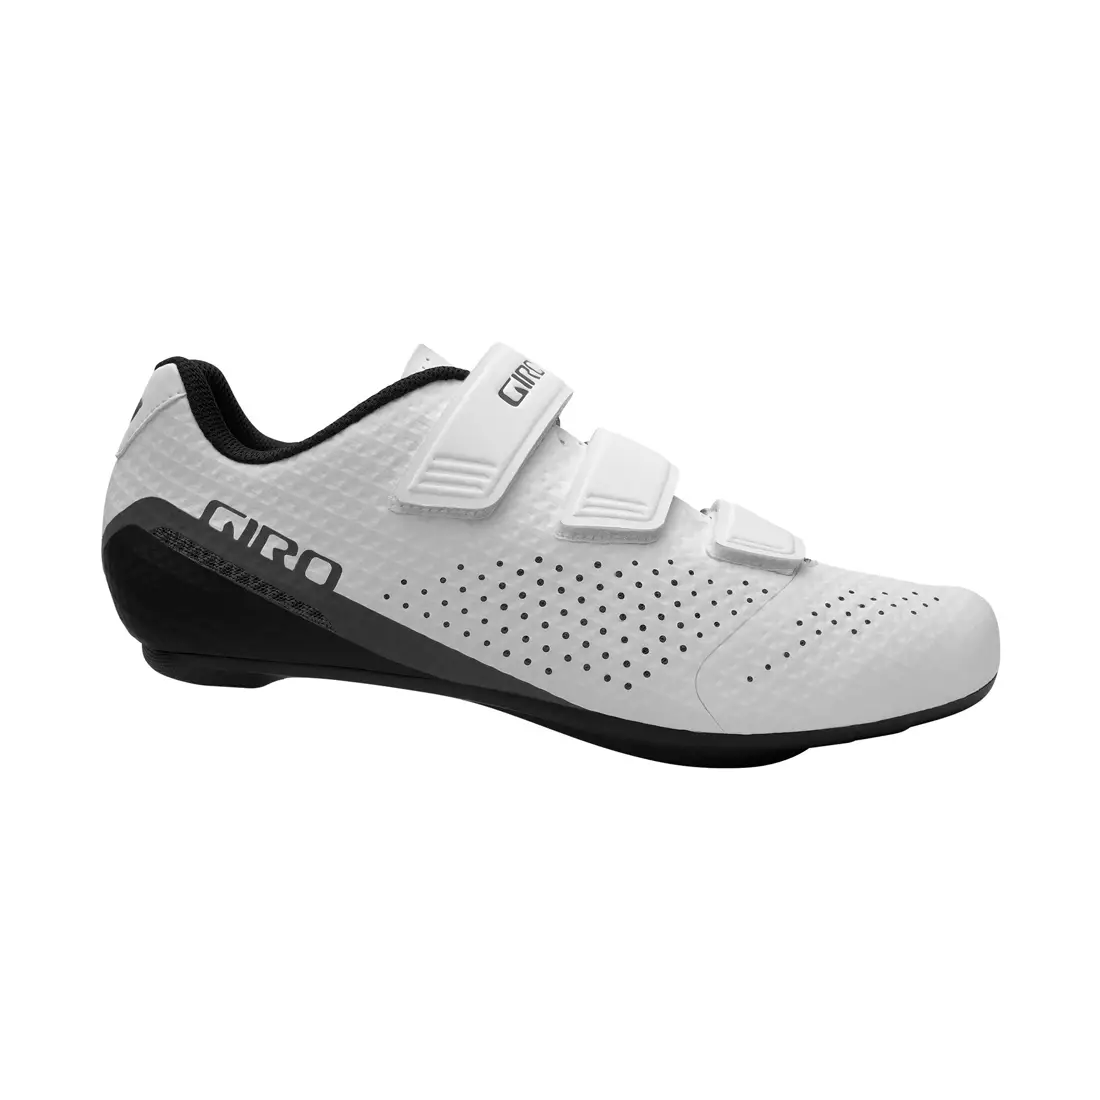 GIRO pánská cyklistická obuv STYLUS white GR-7123015